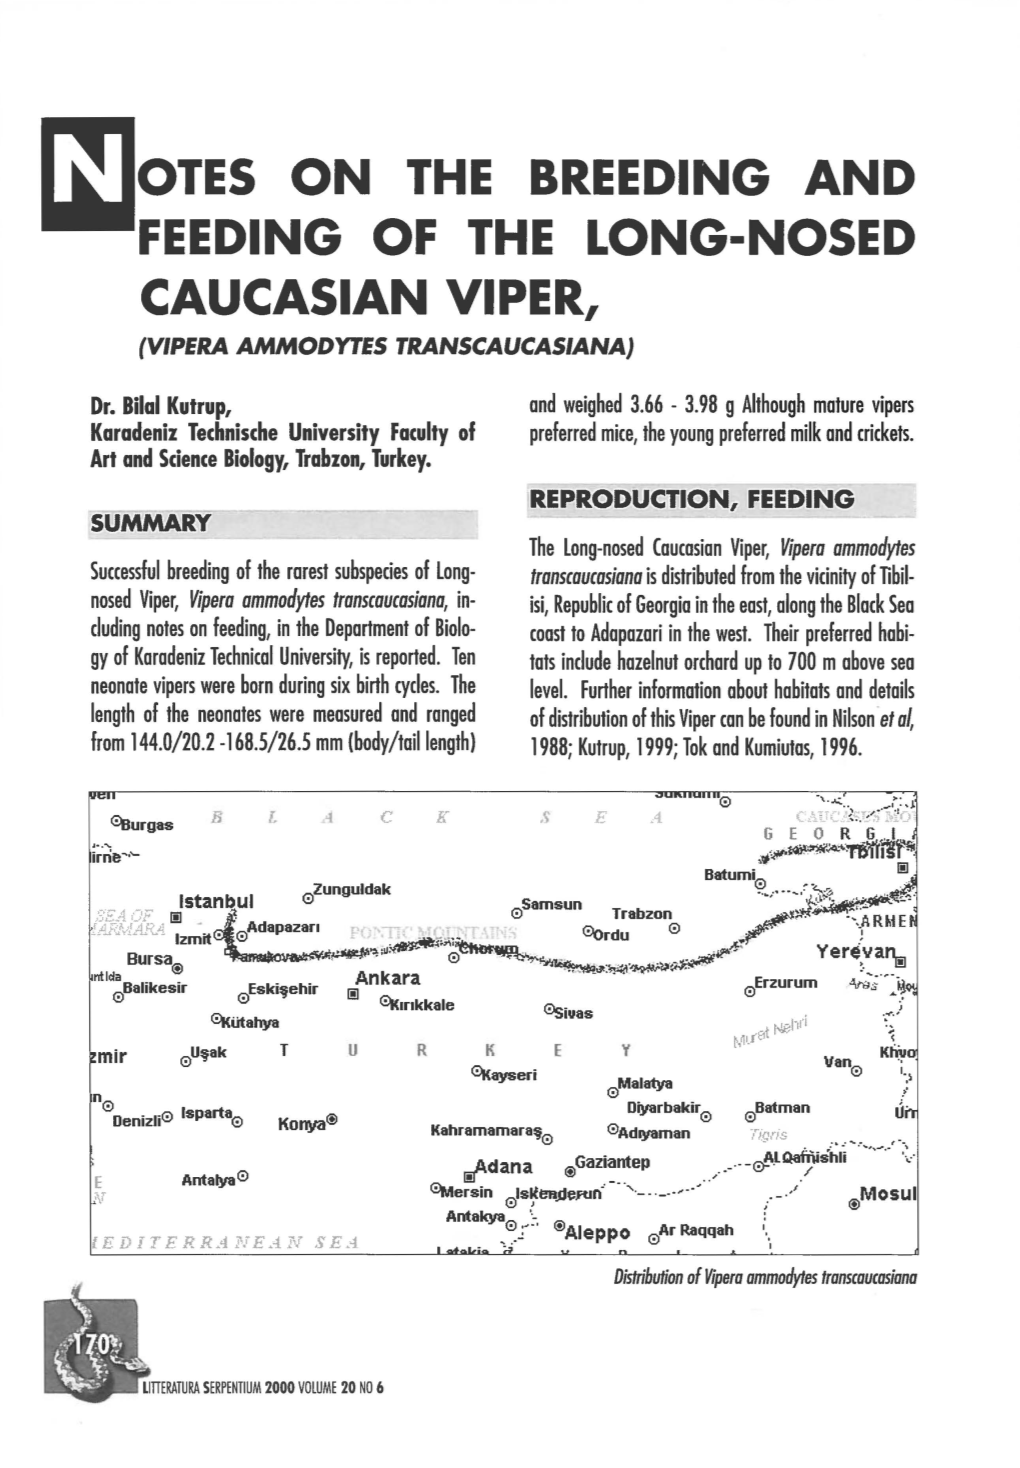 II]Otes on the BREEDING and FEEDING of the LONG-NOSED CAUCASIAN VIPER, (VIPERA AMMODYTES TRANSCAUCASIANA)